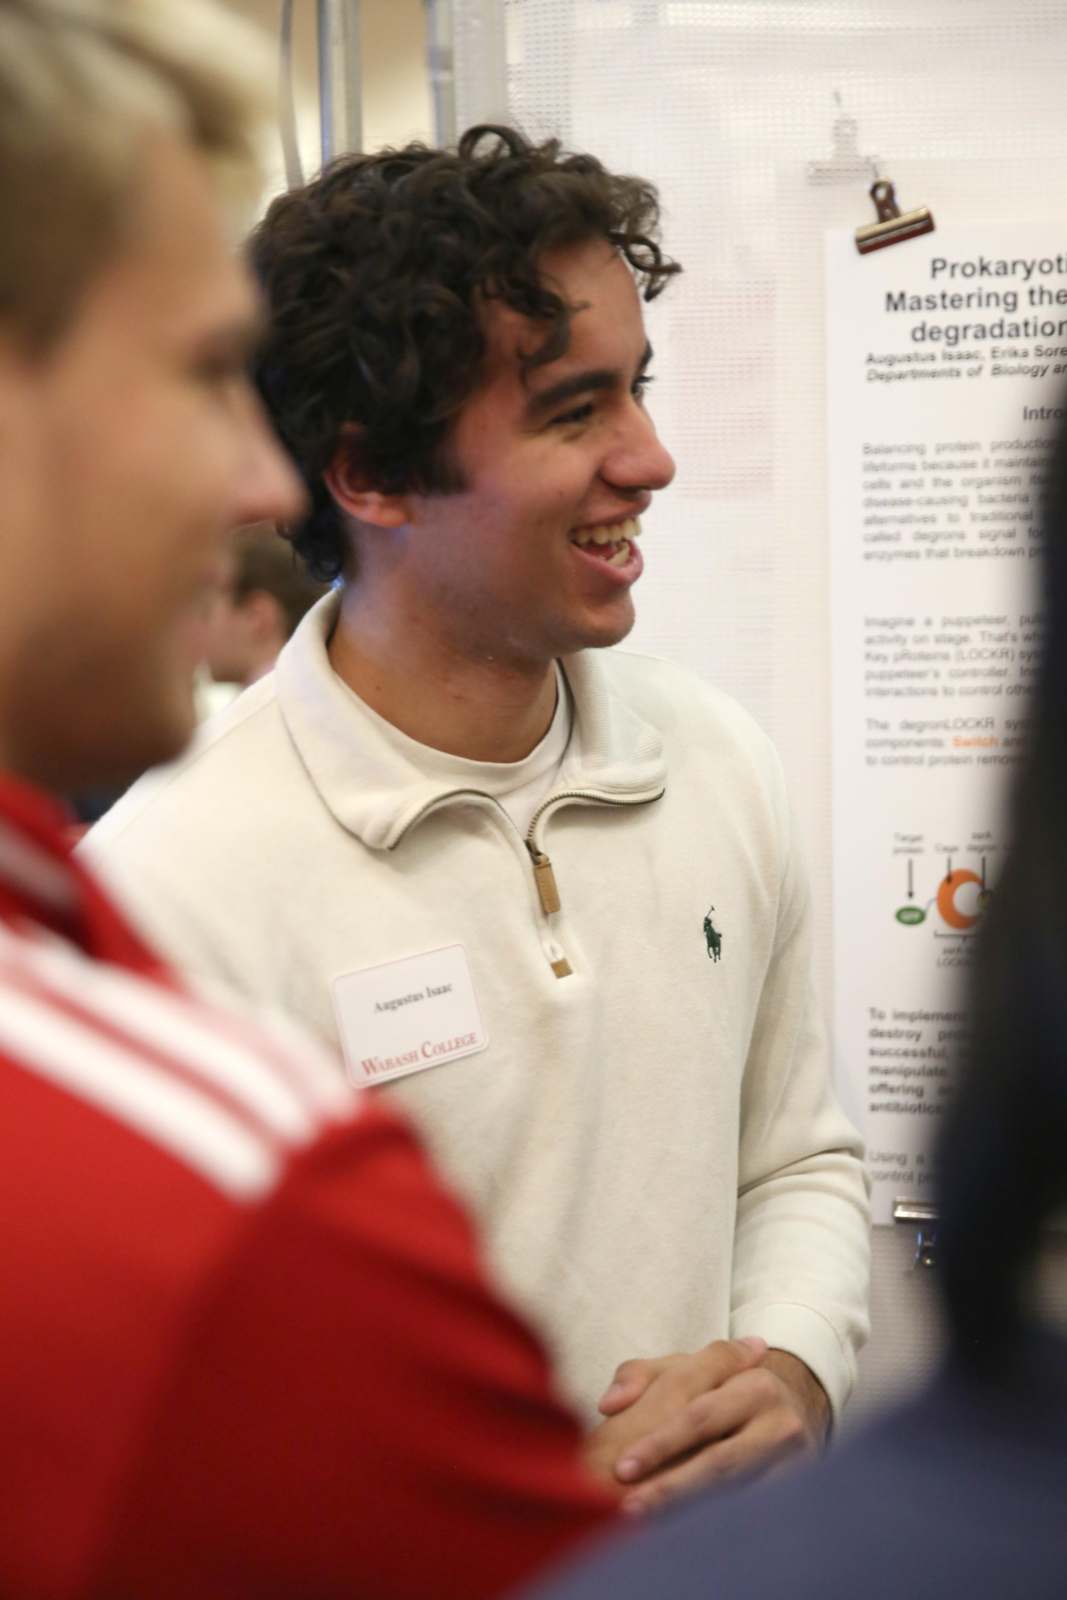 a man smiling at a presentation